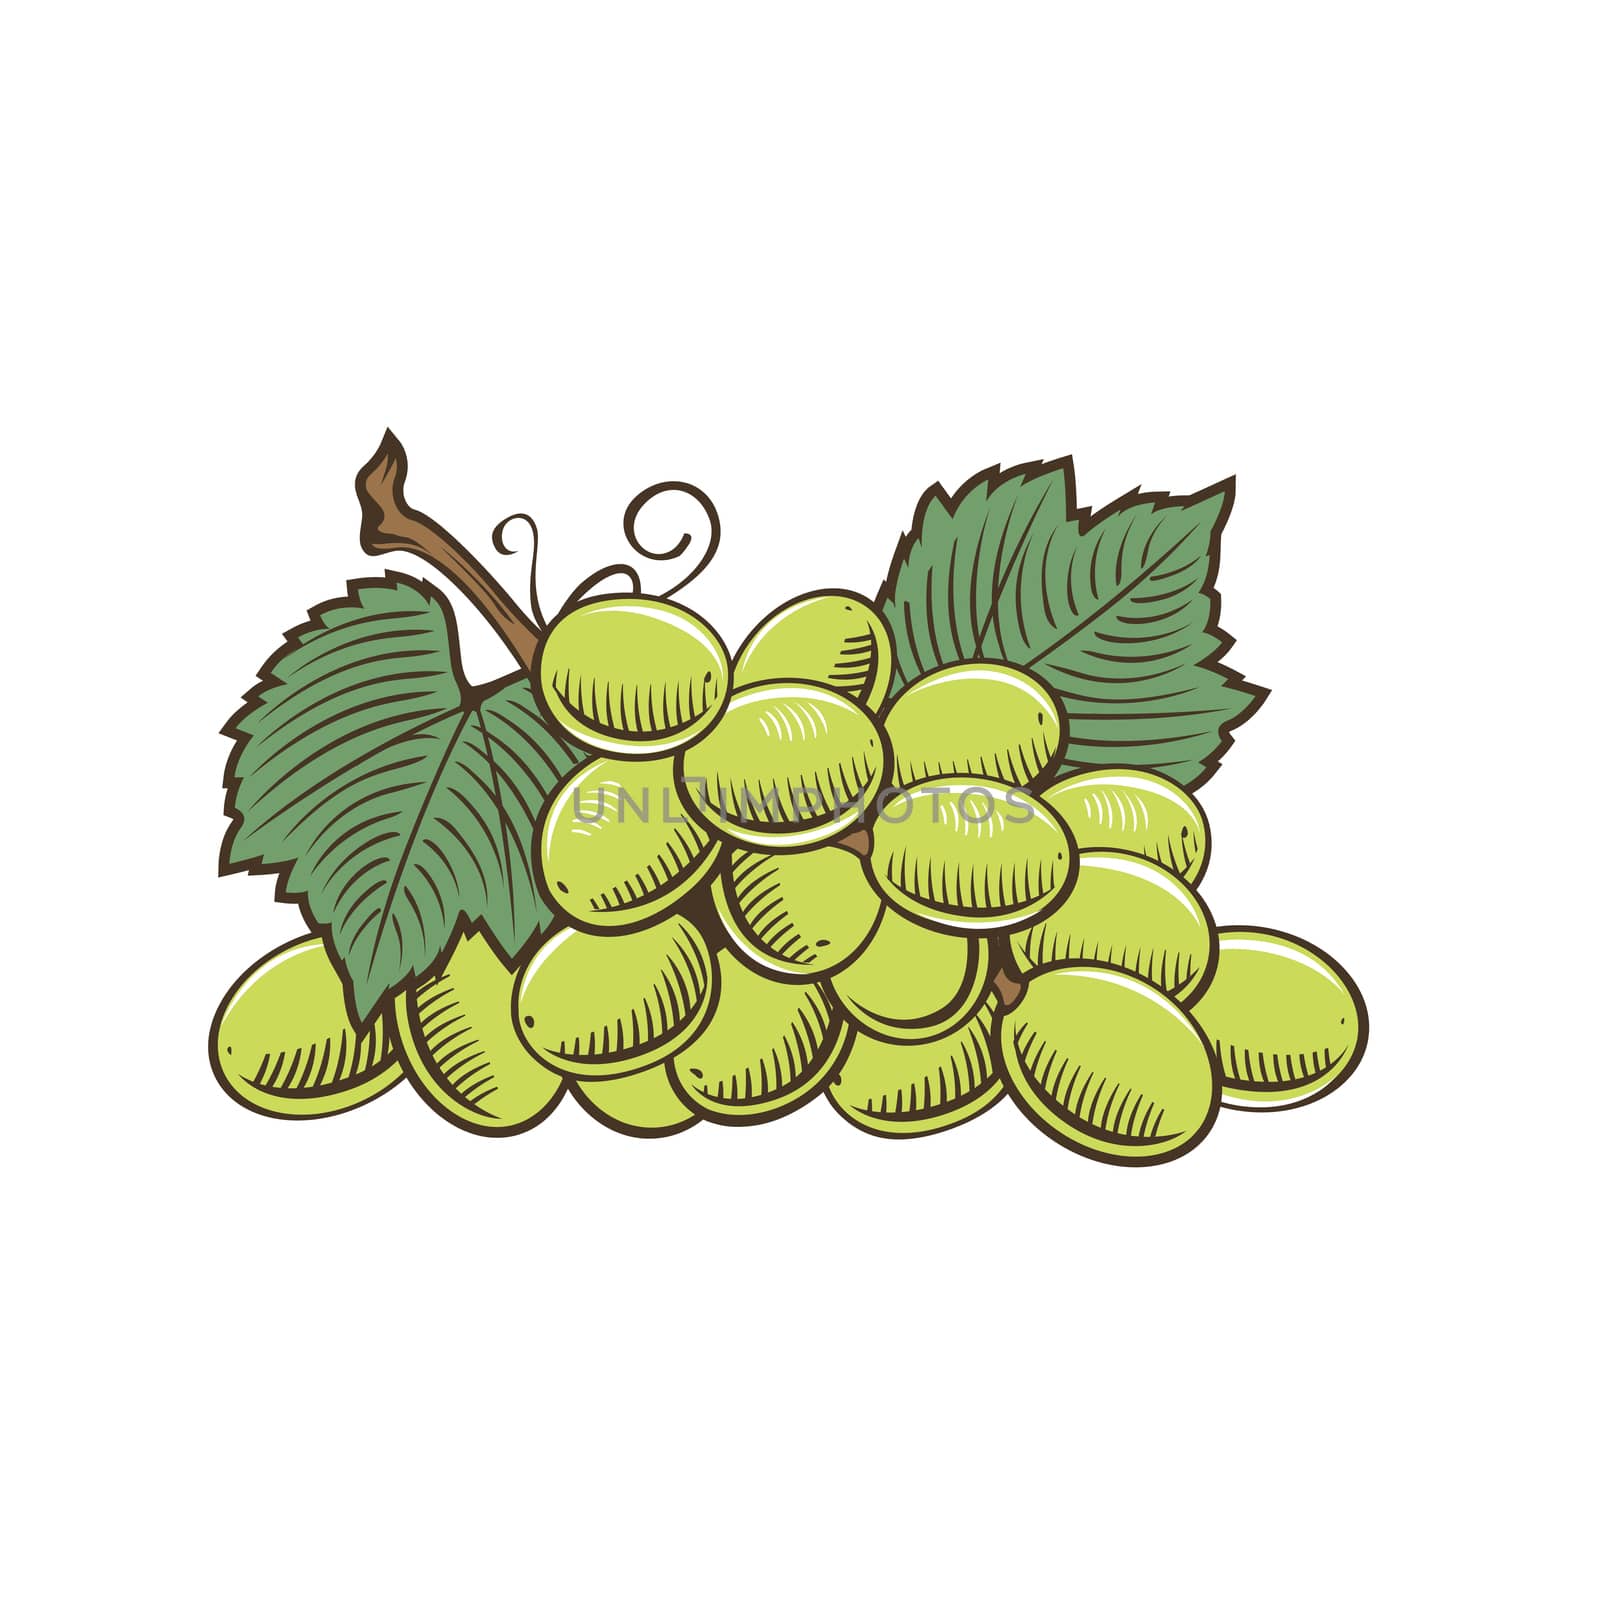 Grapes in vintage style. Line art illustration.